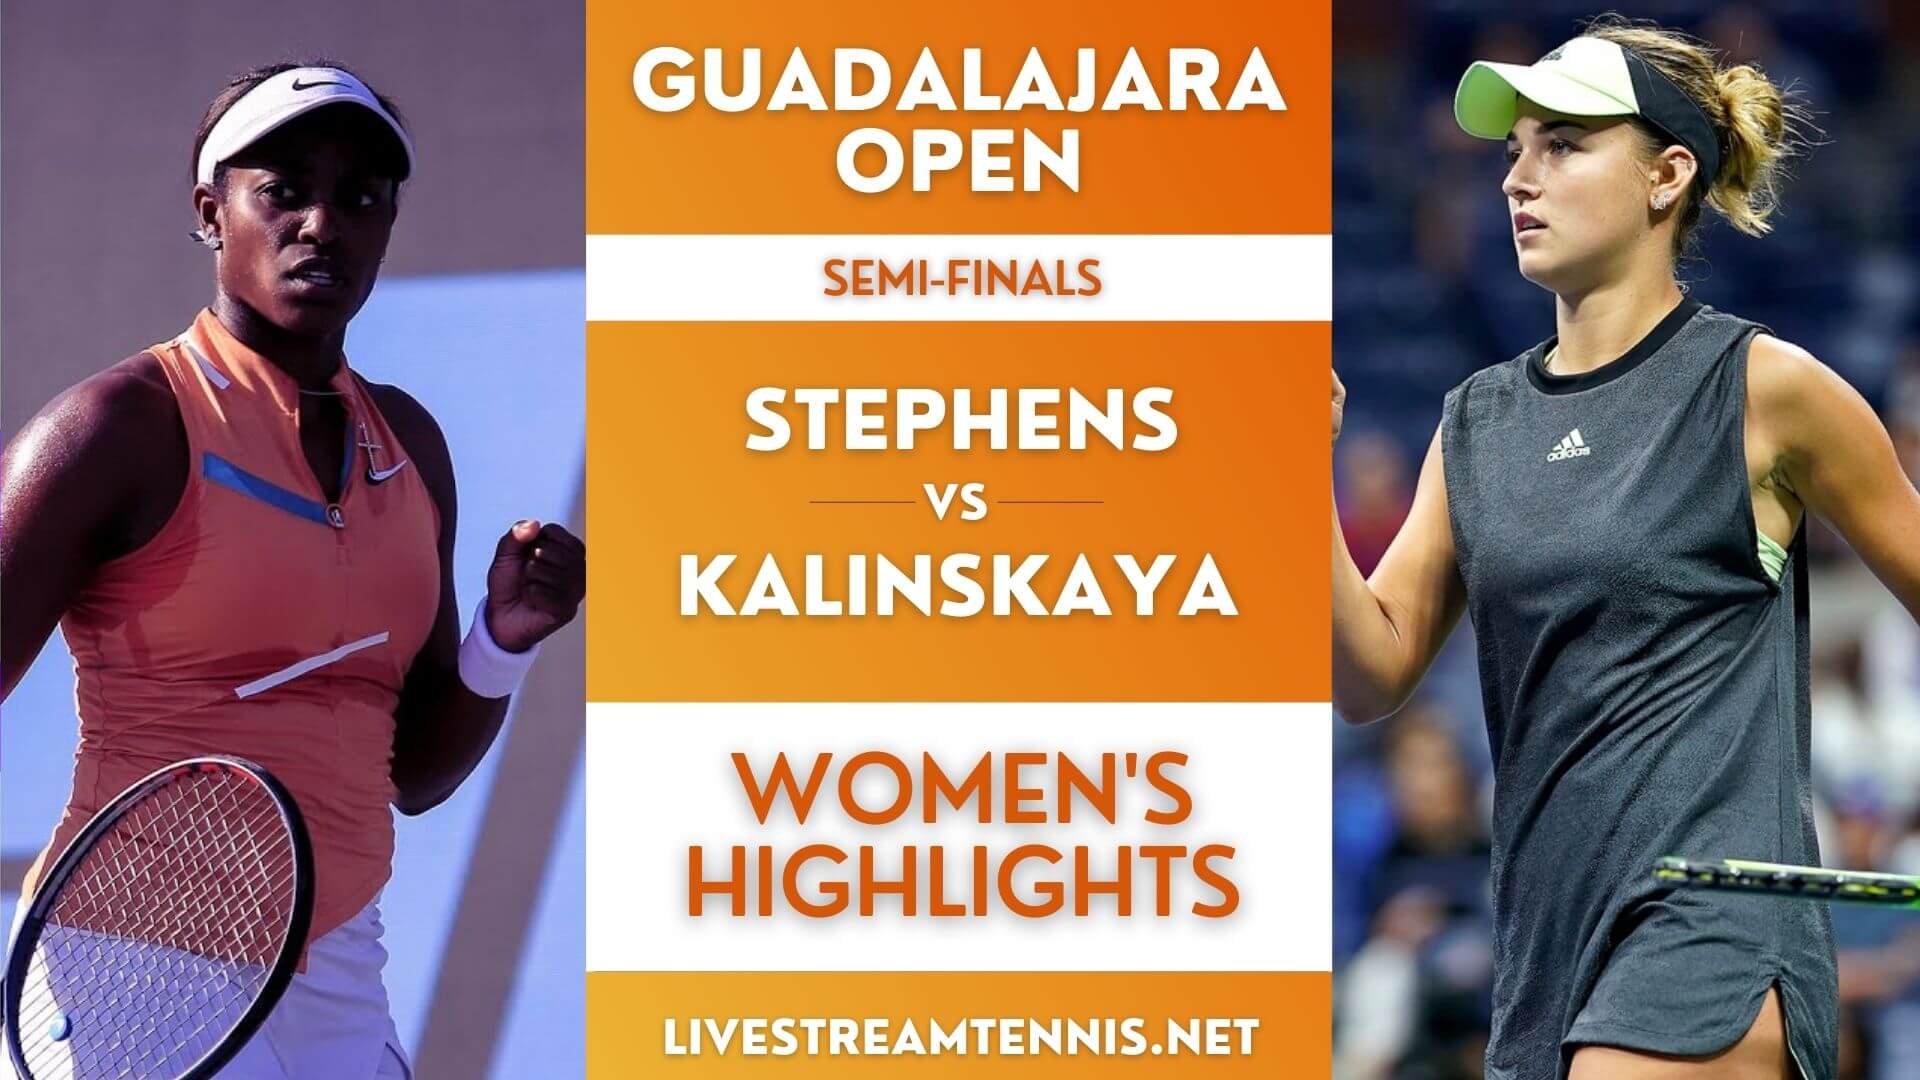 Guadalajara Open Ladies Semi Final 2 Highlights 2022